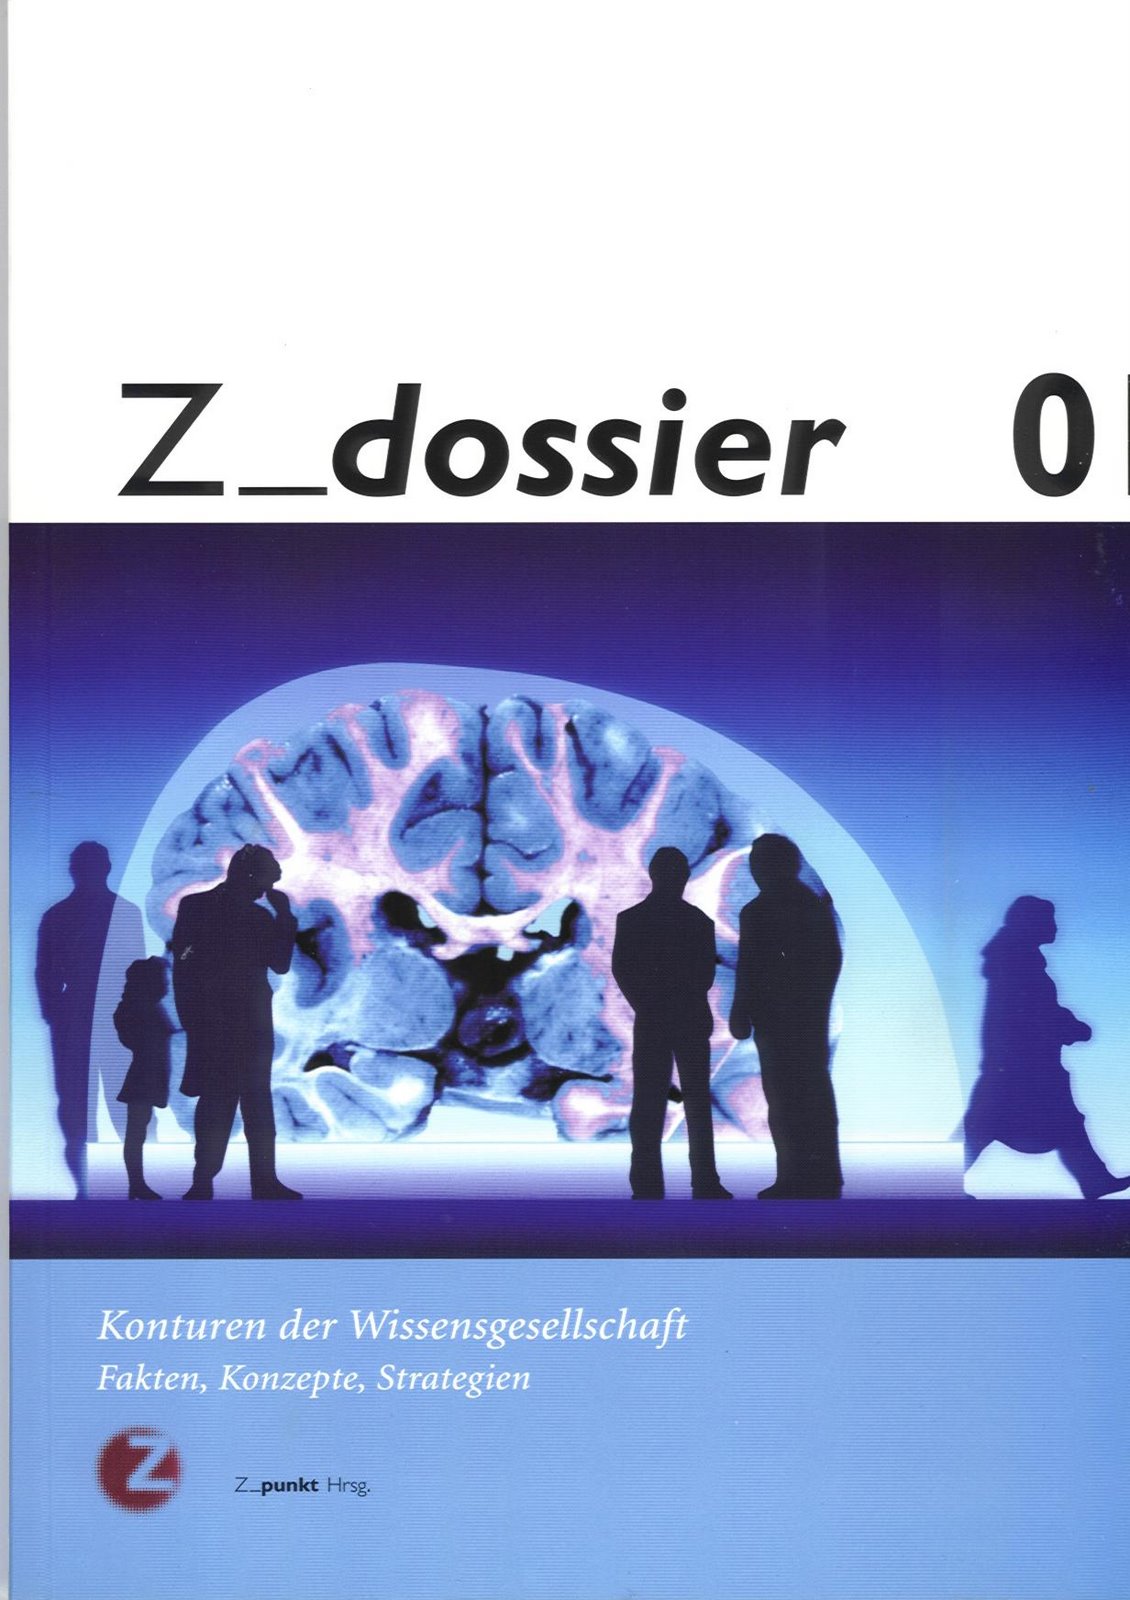 [Z-dossier+Saiger.jpg]